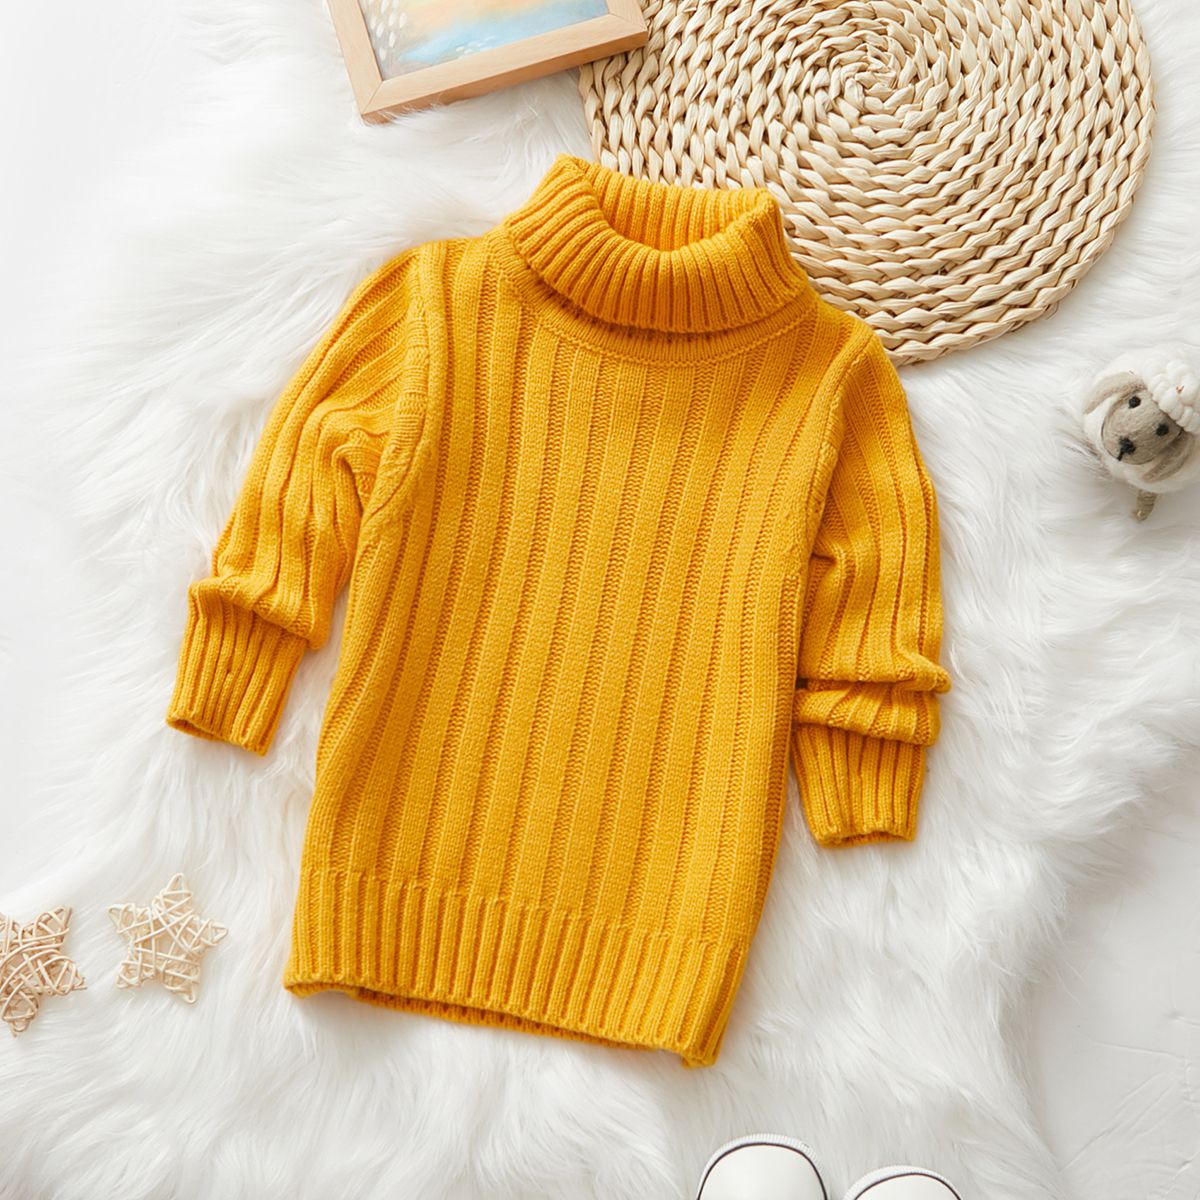 Baby/Toddler Girl/Boy Cowboy Design Sweater/Coat/Pants/Shoes/Hat